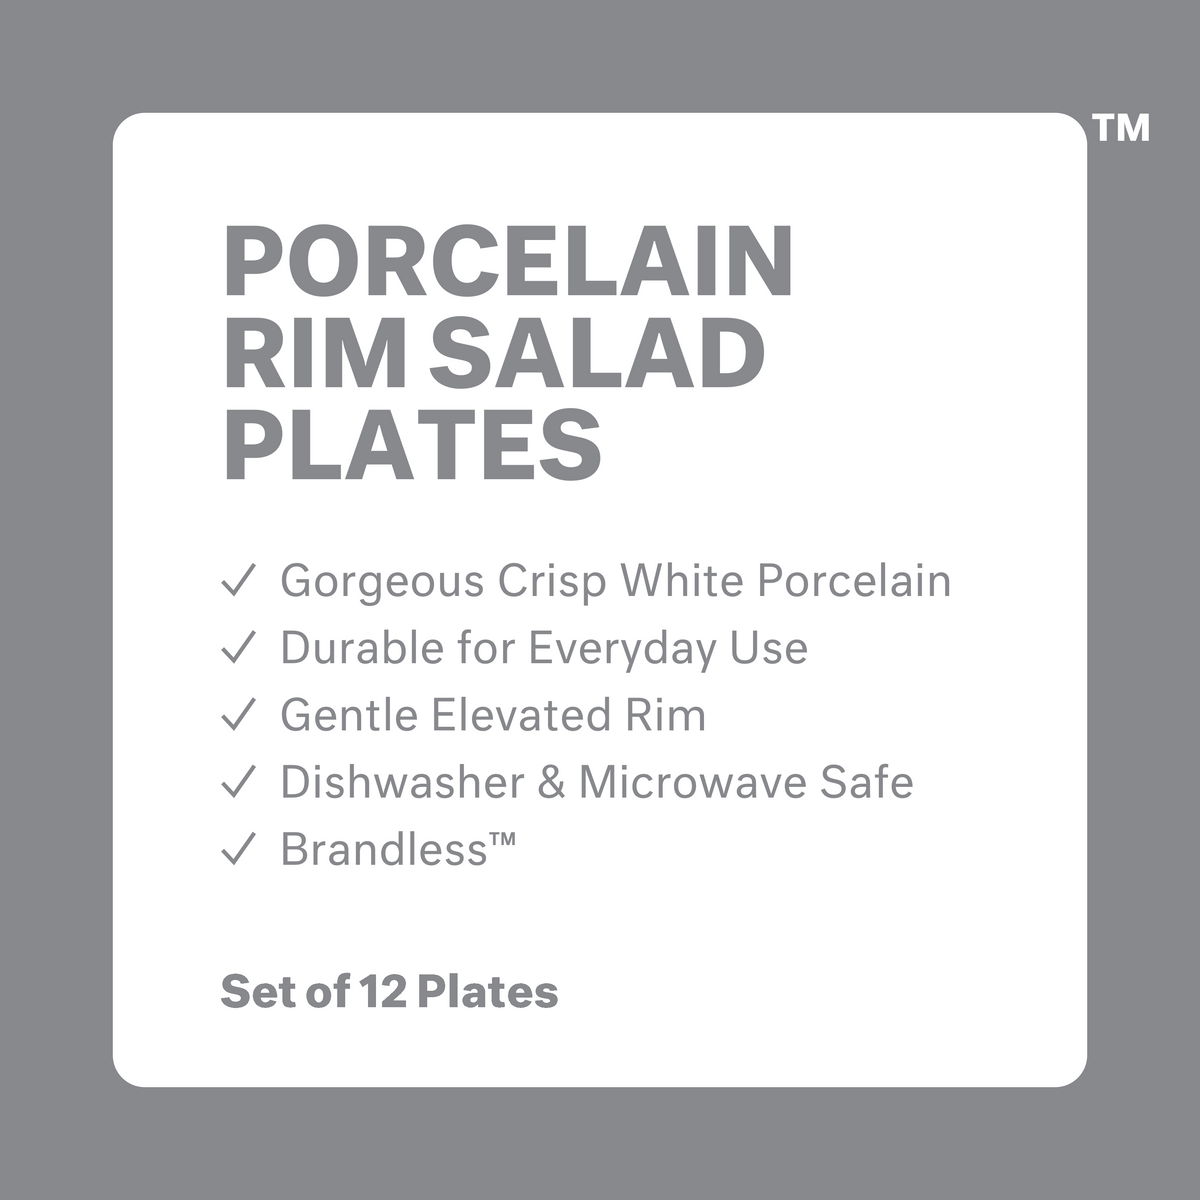 Porcelain rim salad plates: gorgeous crisp white porcelain, durable for everyday use, gentle elevated rim, dishwasher and microwave safe, Brandless. Set of 12 plates.